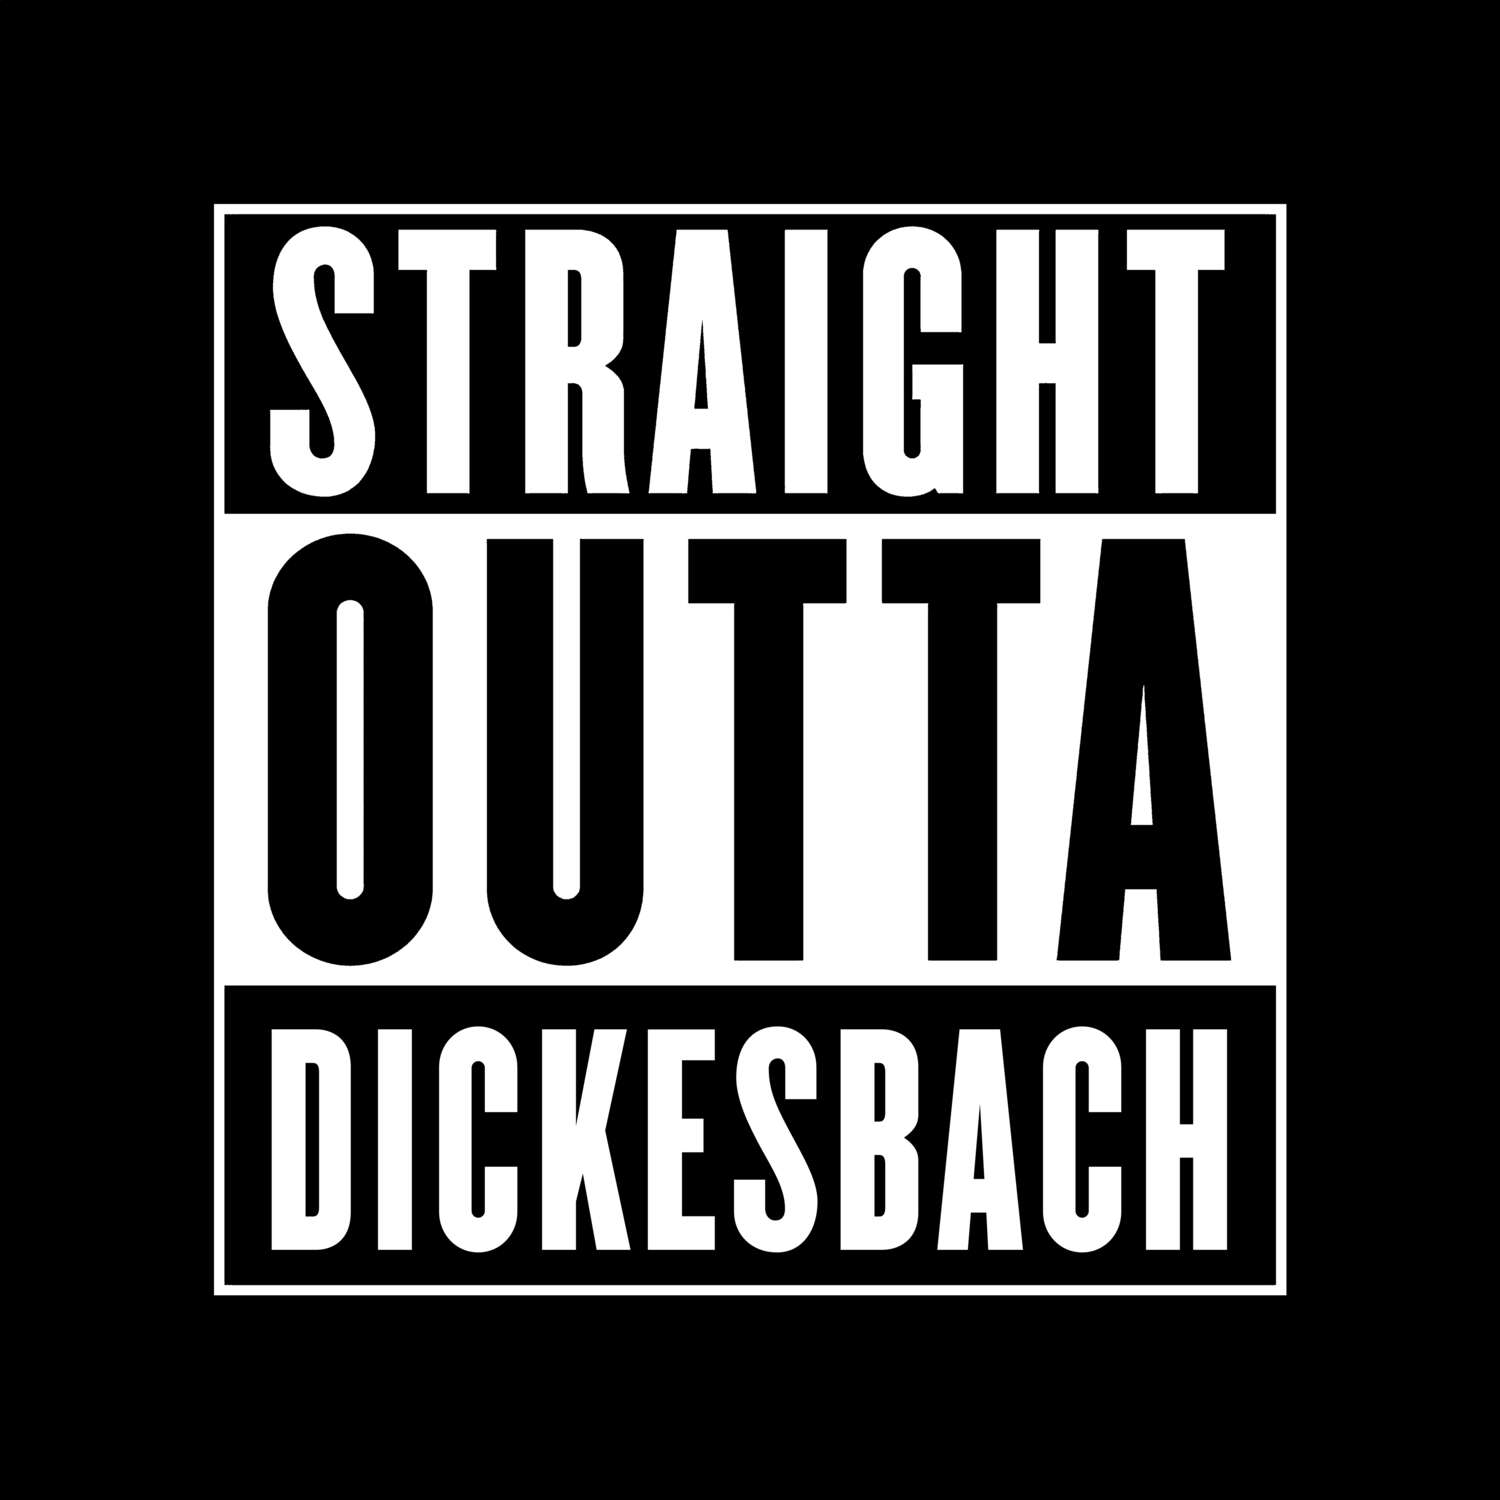 Dickesbach T-Shirt »Straight Outta«